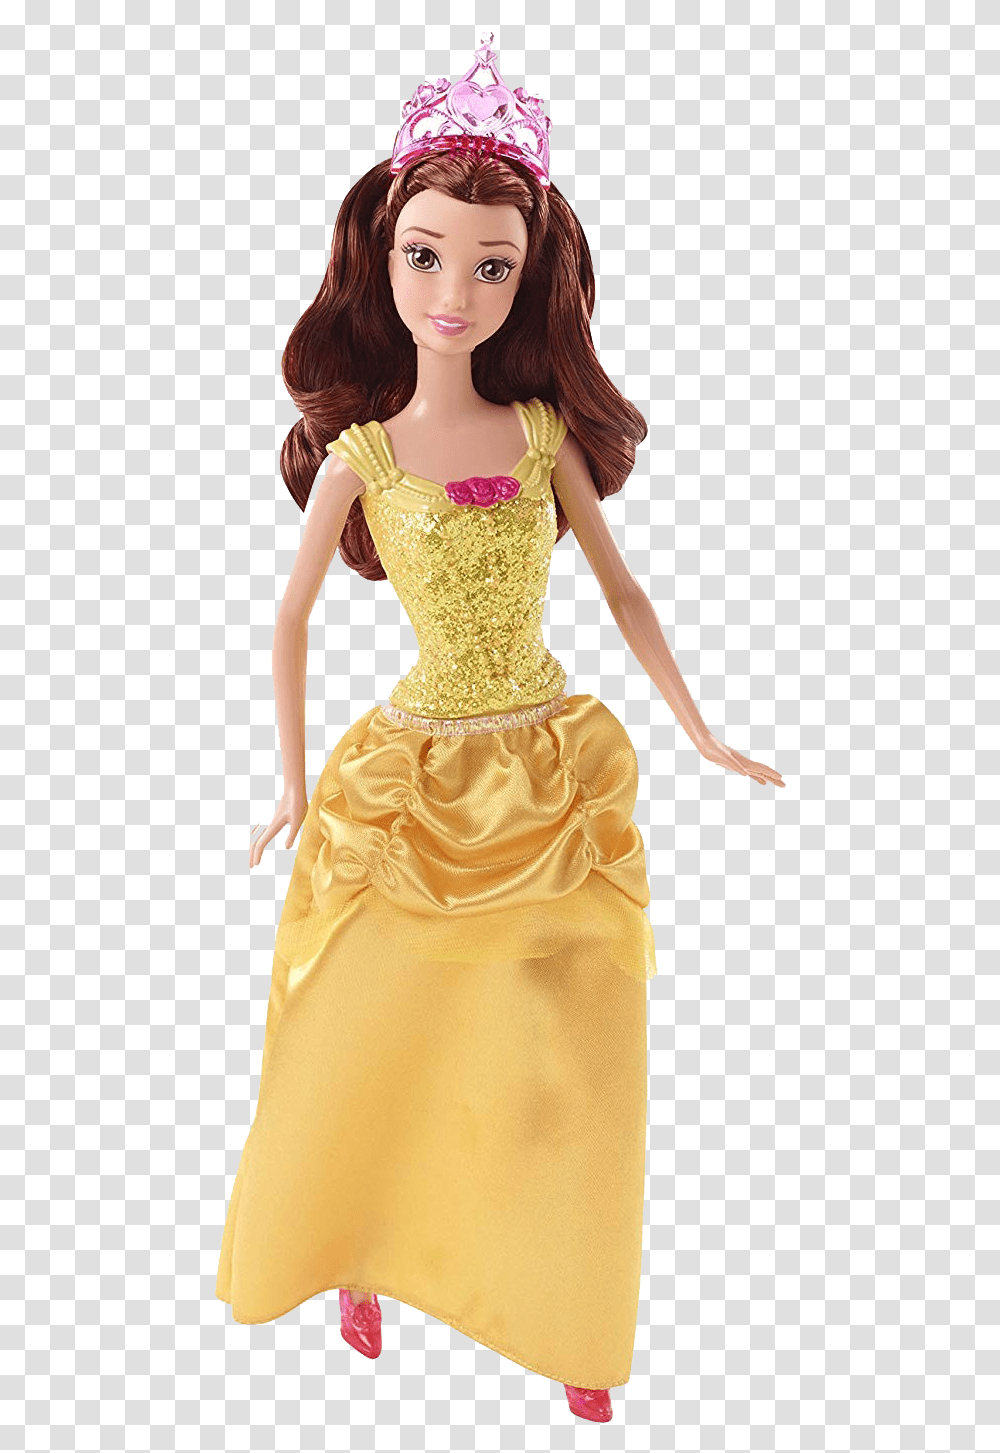 Belle Image File Disney Princess Sparkle Belle Doll, Toy, Barbie, Figurine, Wedding Gown Transparent Png